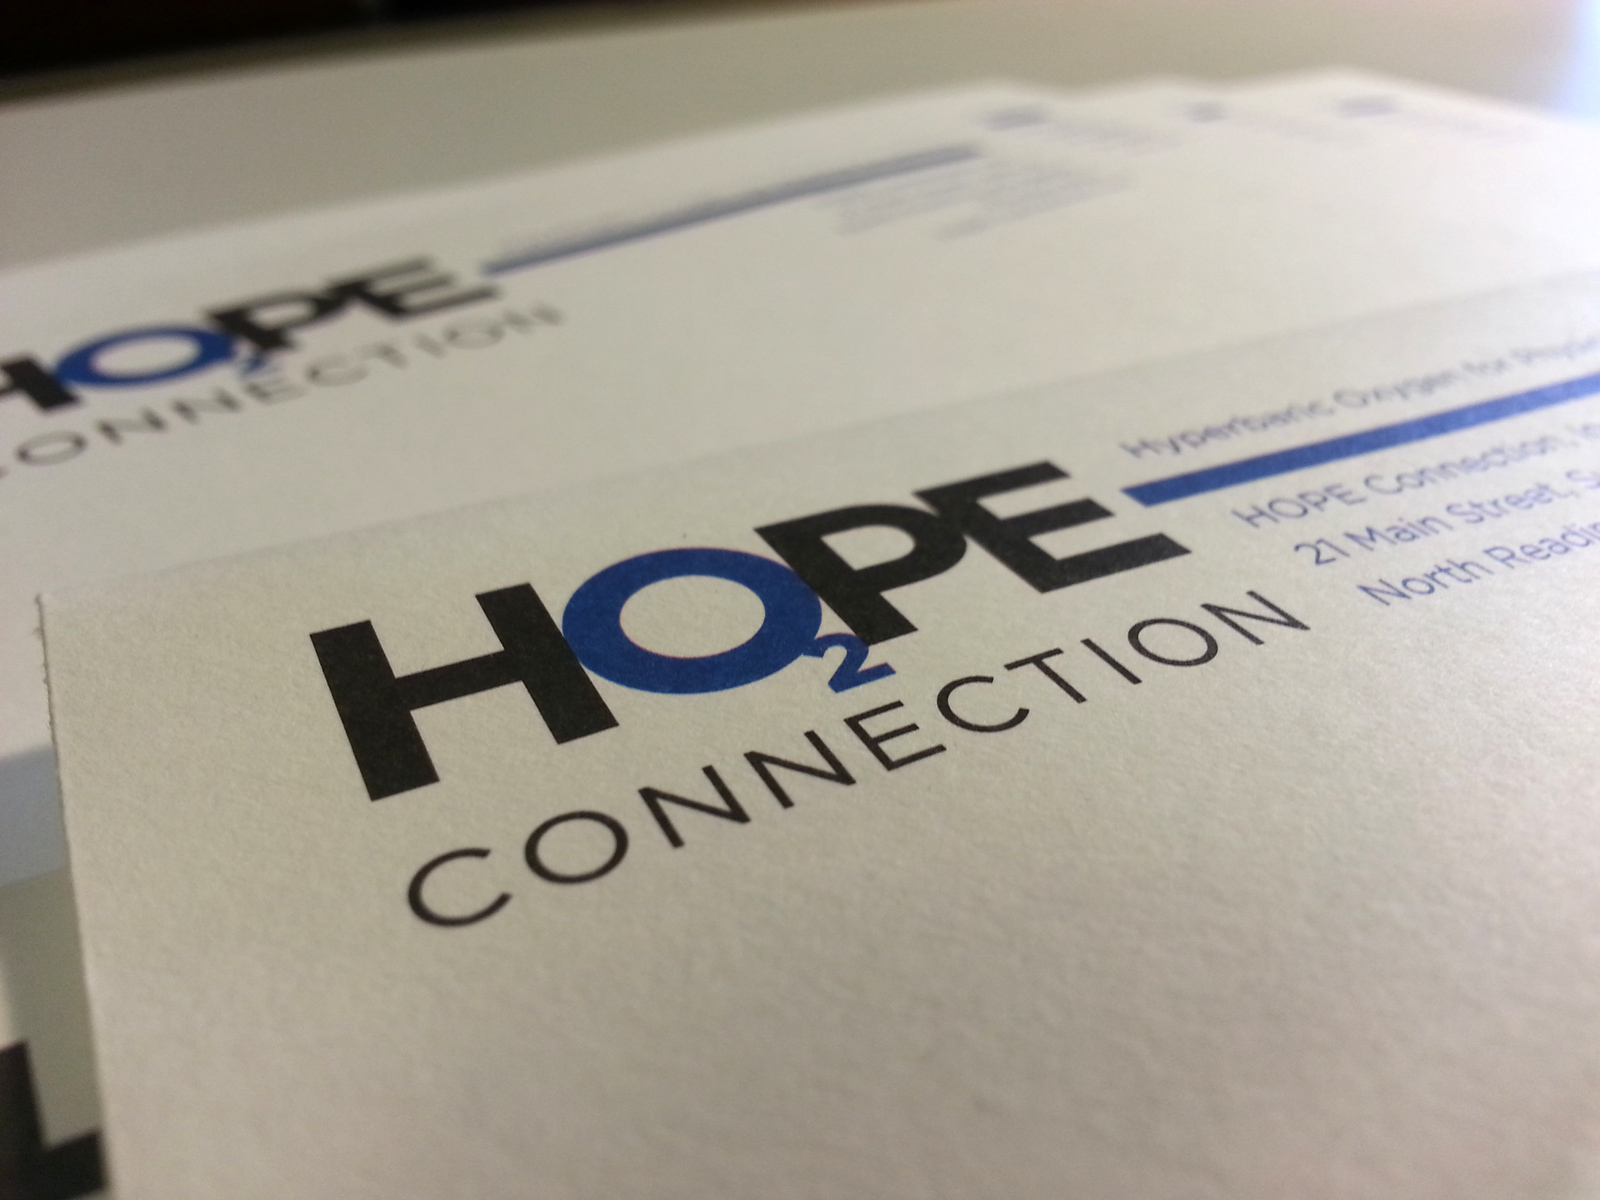 HOPE Connection Letterhead